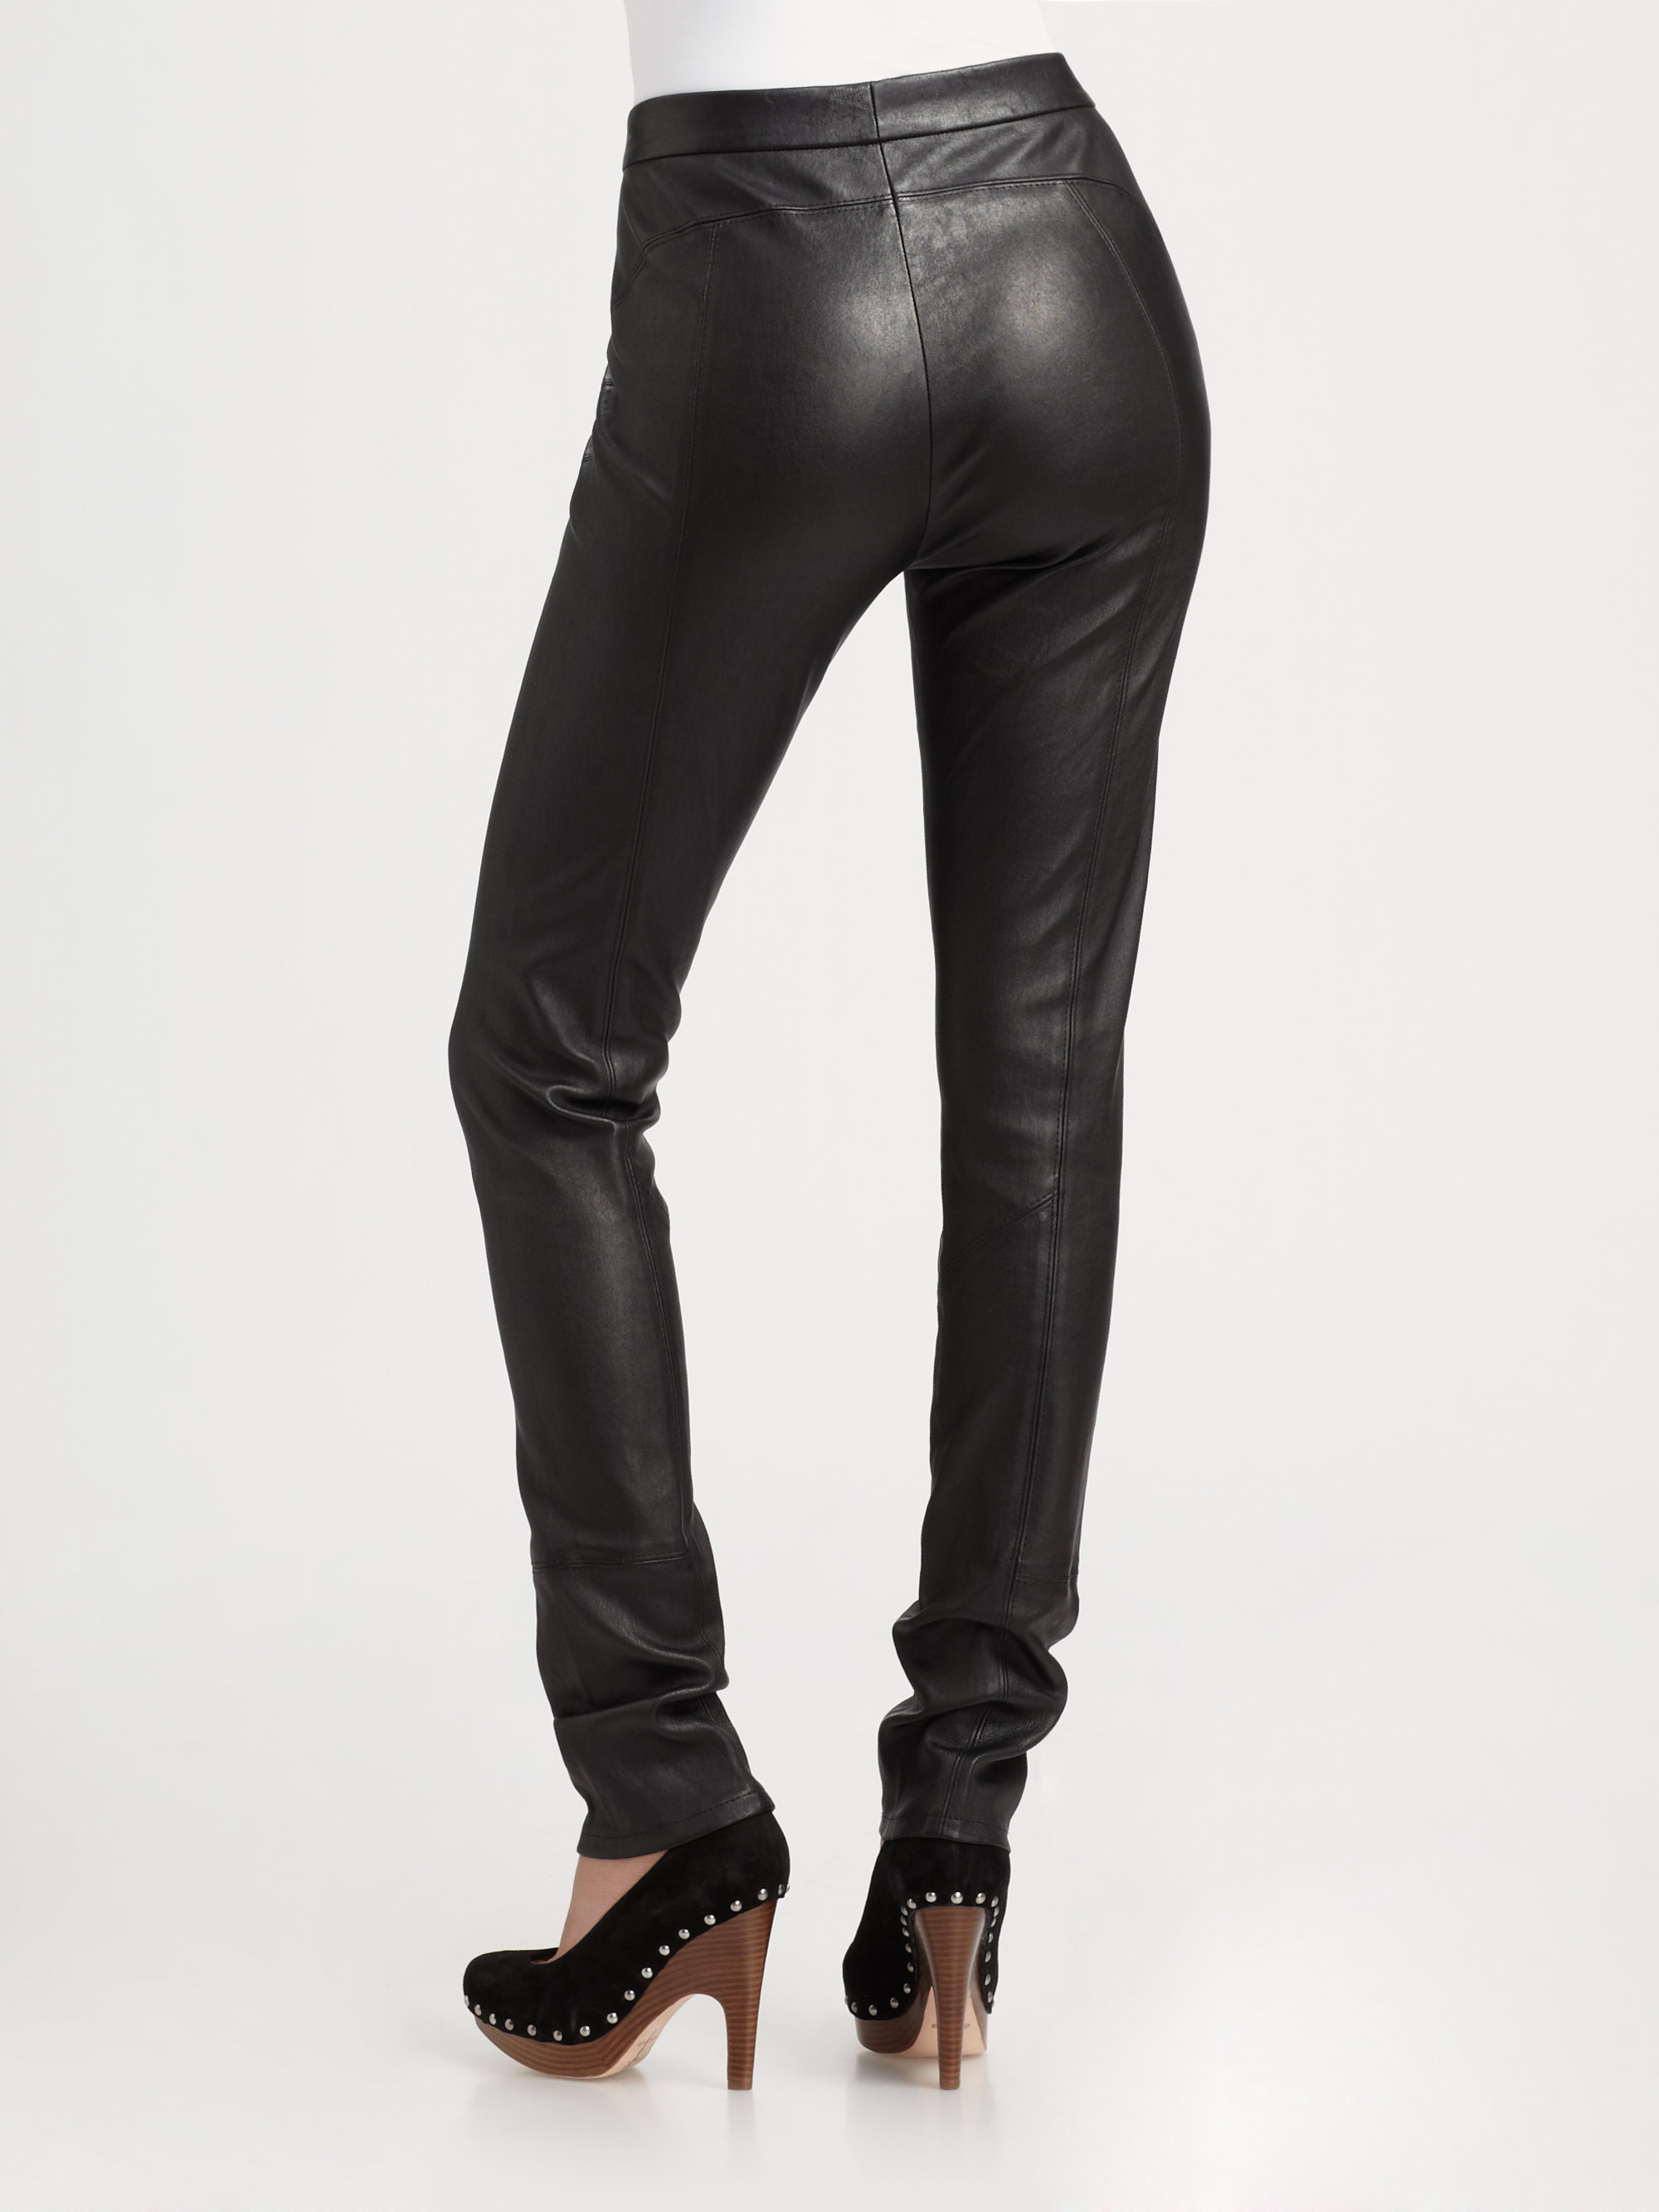 Lyst - Elie Tahari Stretch Leather Pants in Black